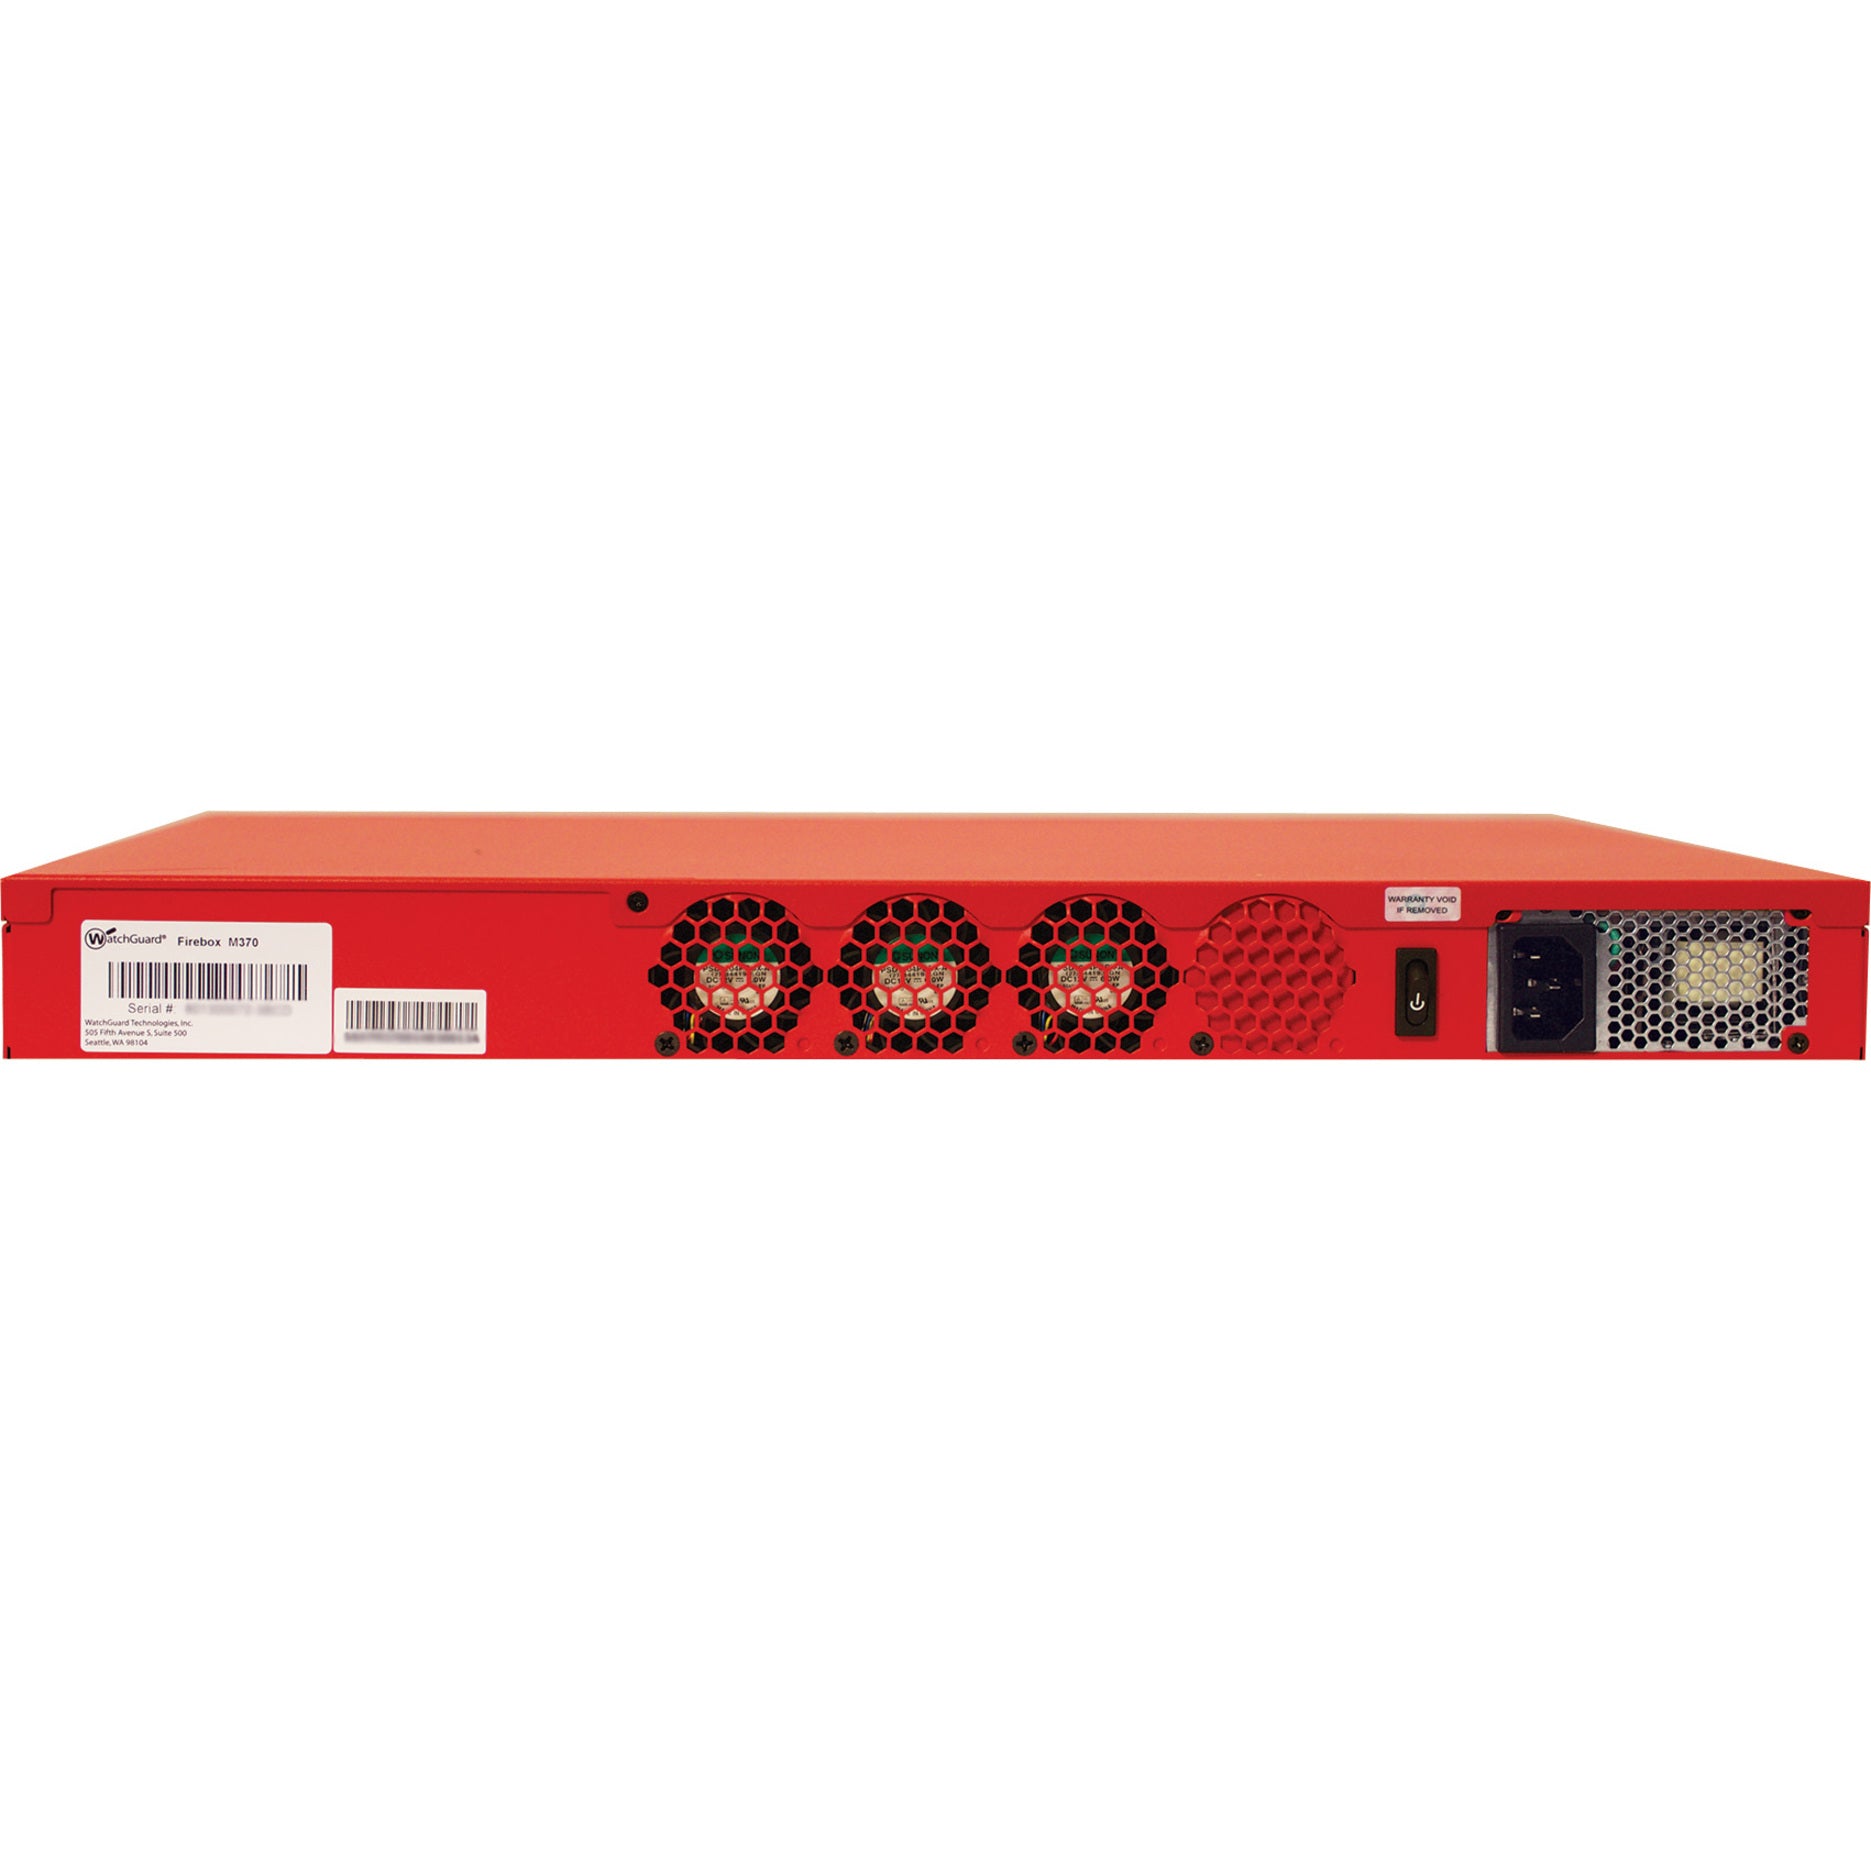 WatchGuard WGM37071 Firebox M370 High Availability Firewall, 1-yr Standard Support